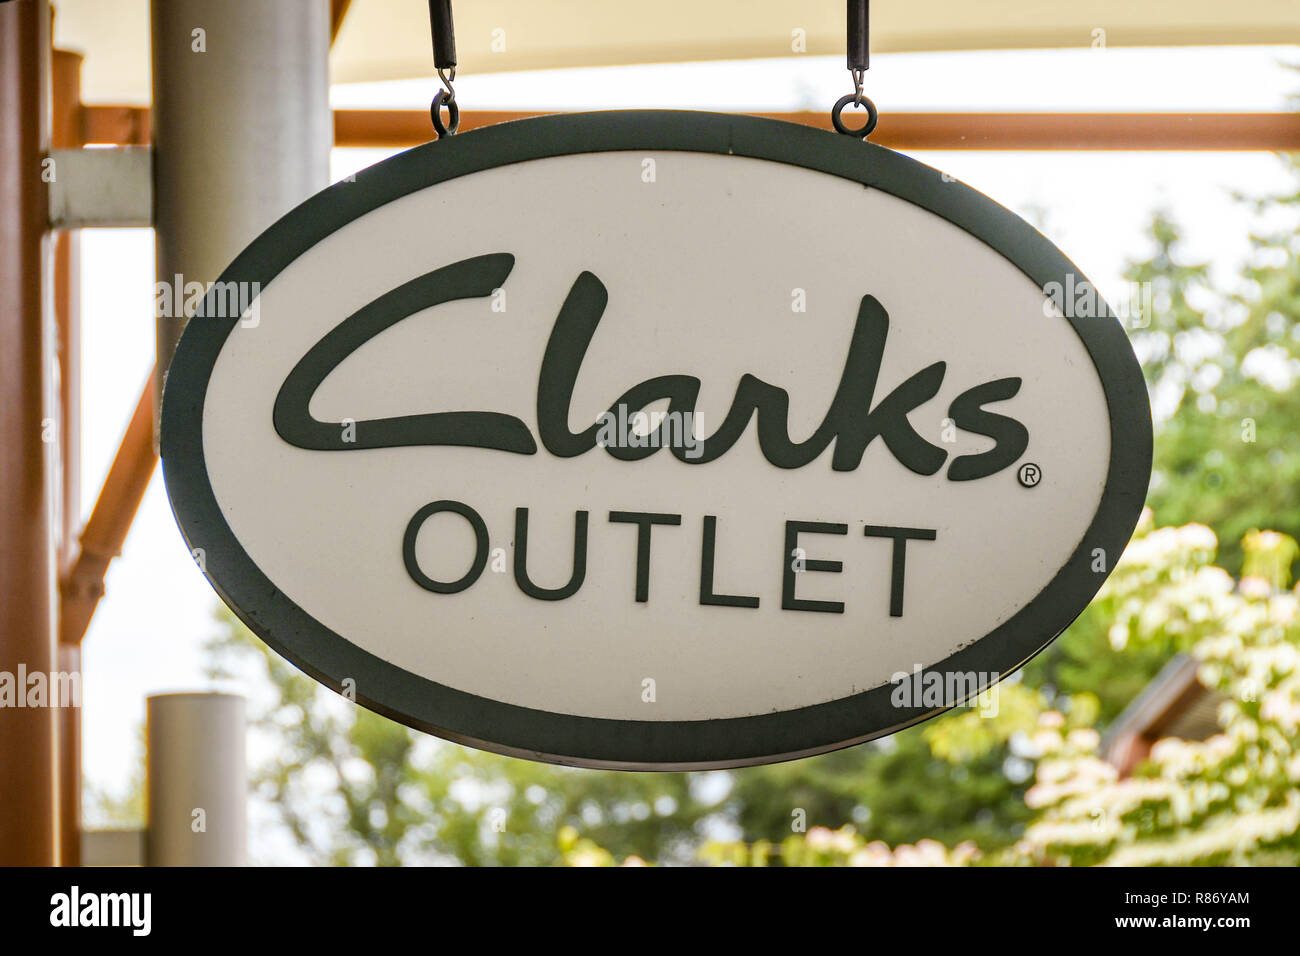 clarks outlet centre